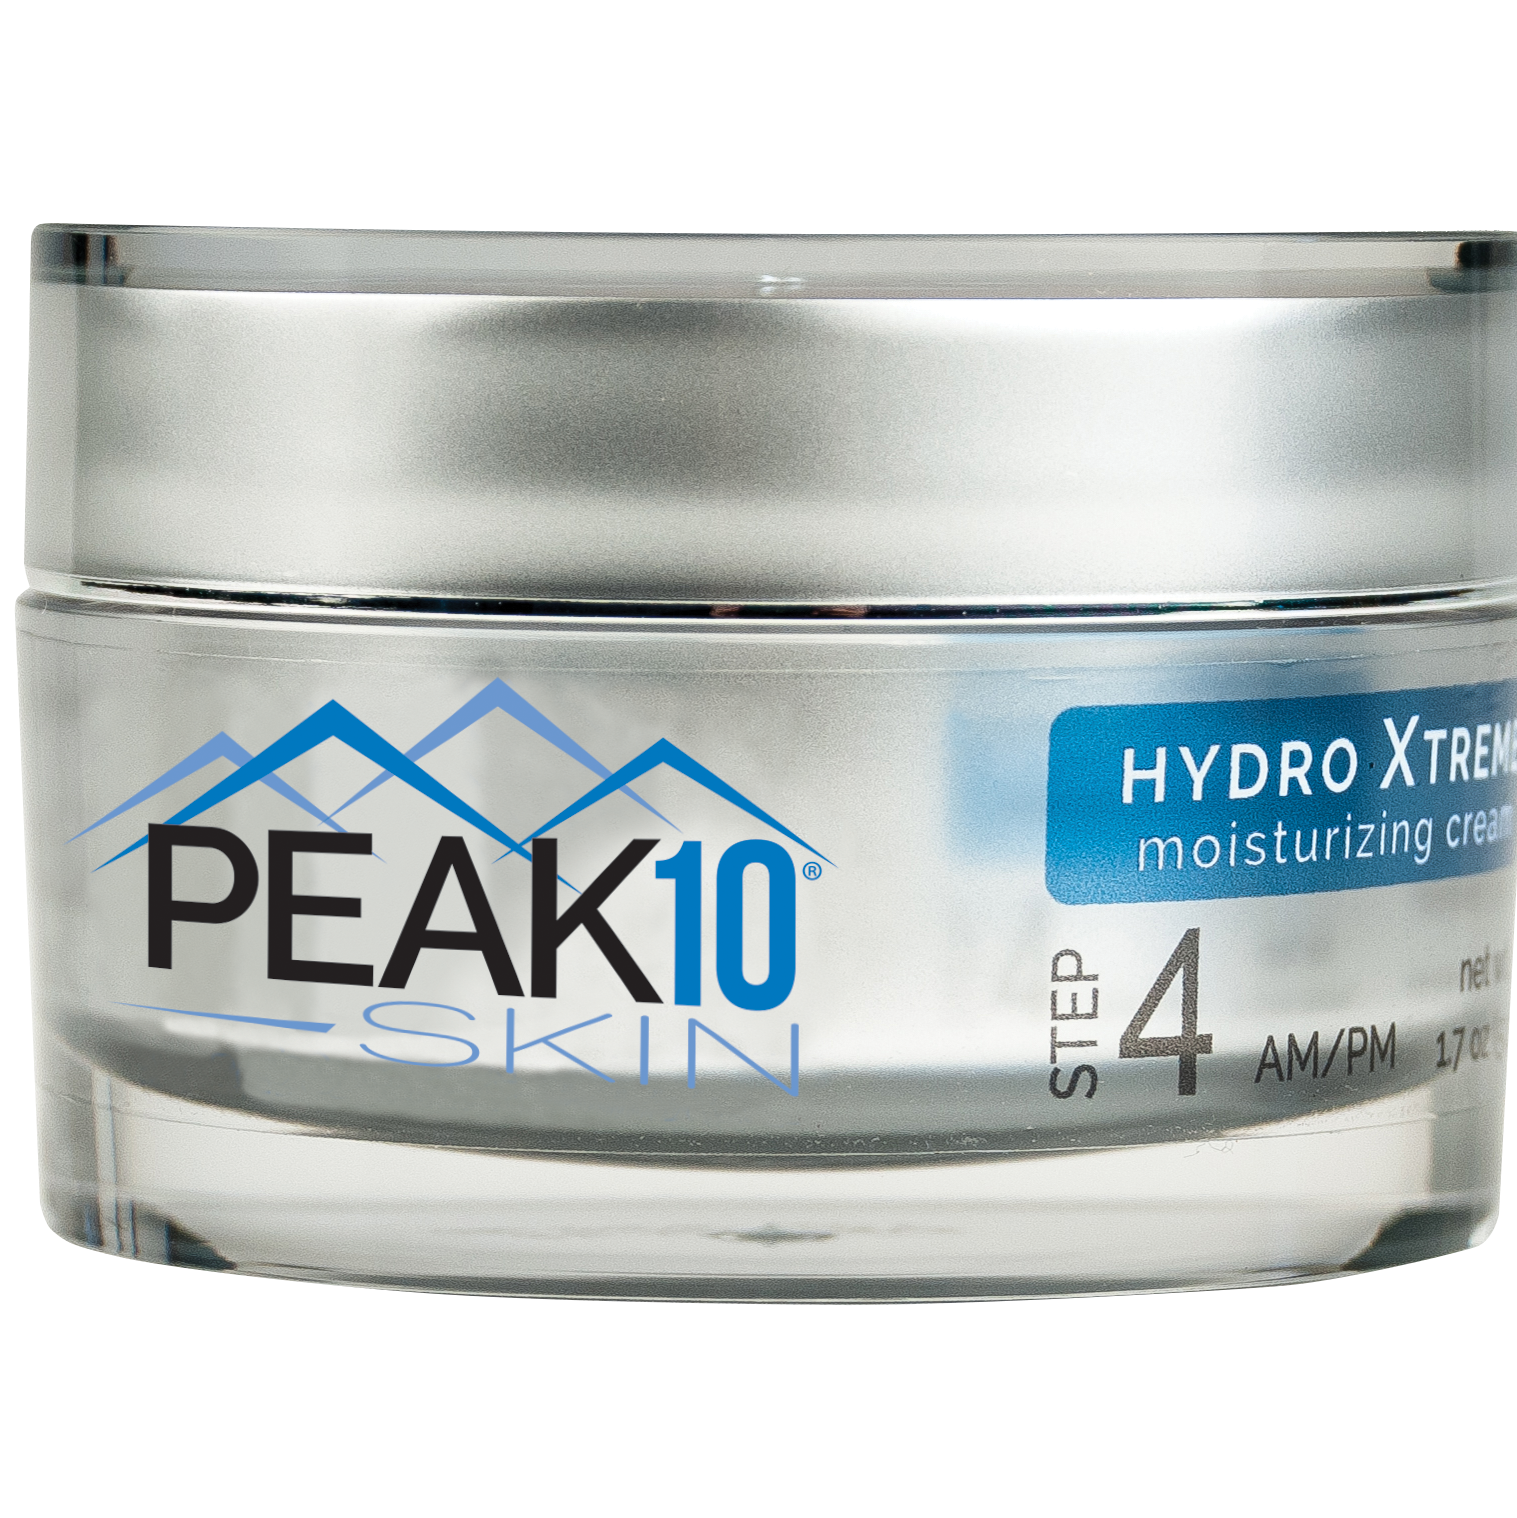 PEAK 10 SKIN HYDROXtreme Moisturizing Cream